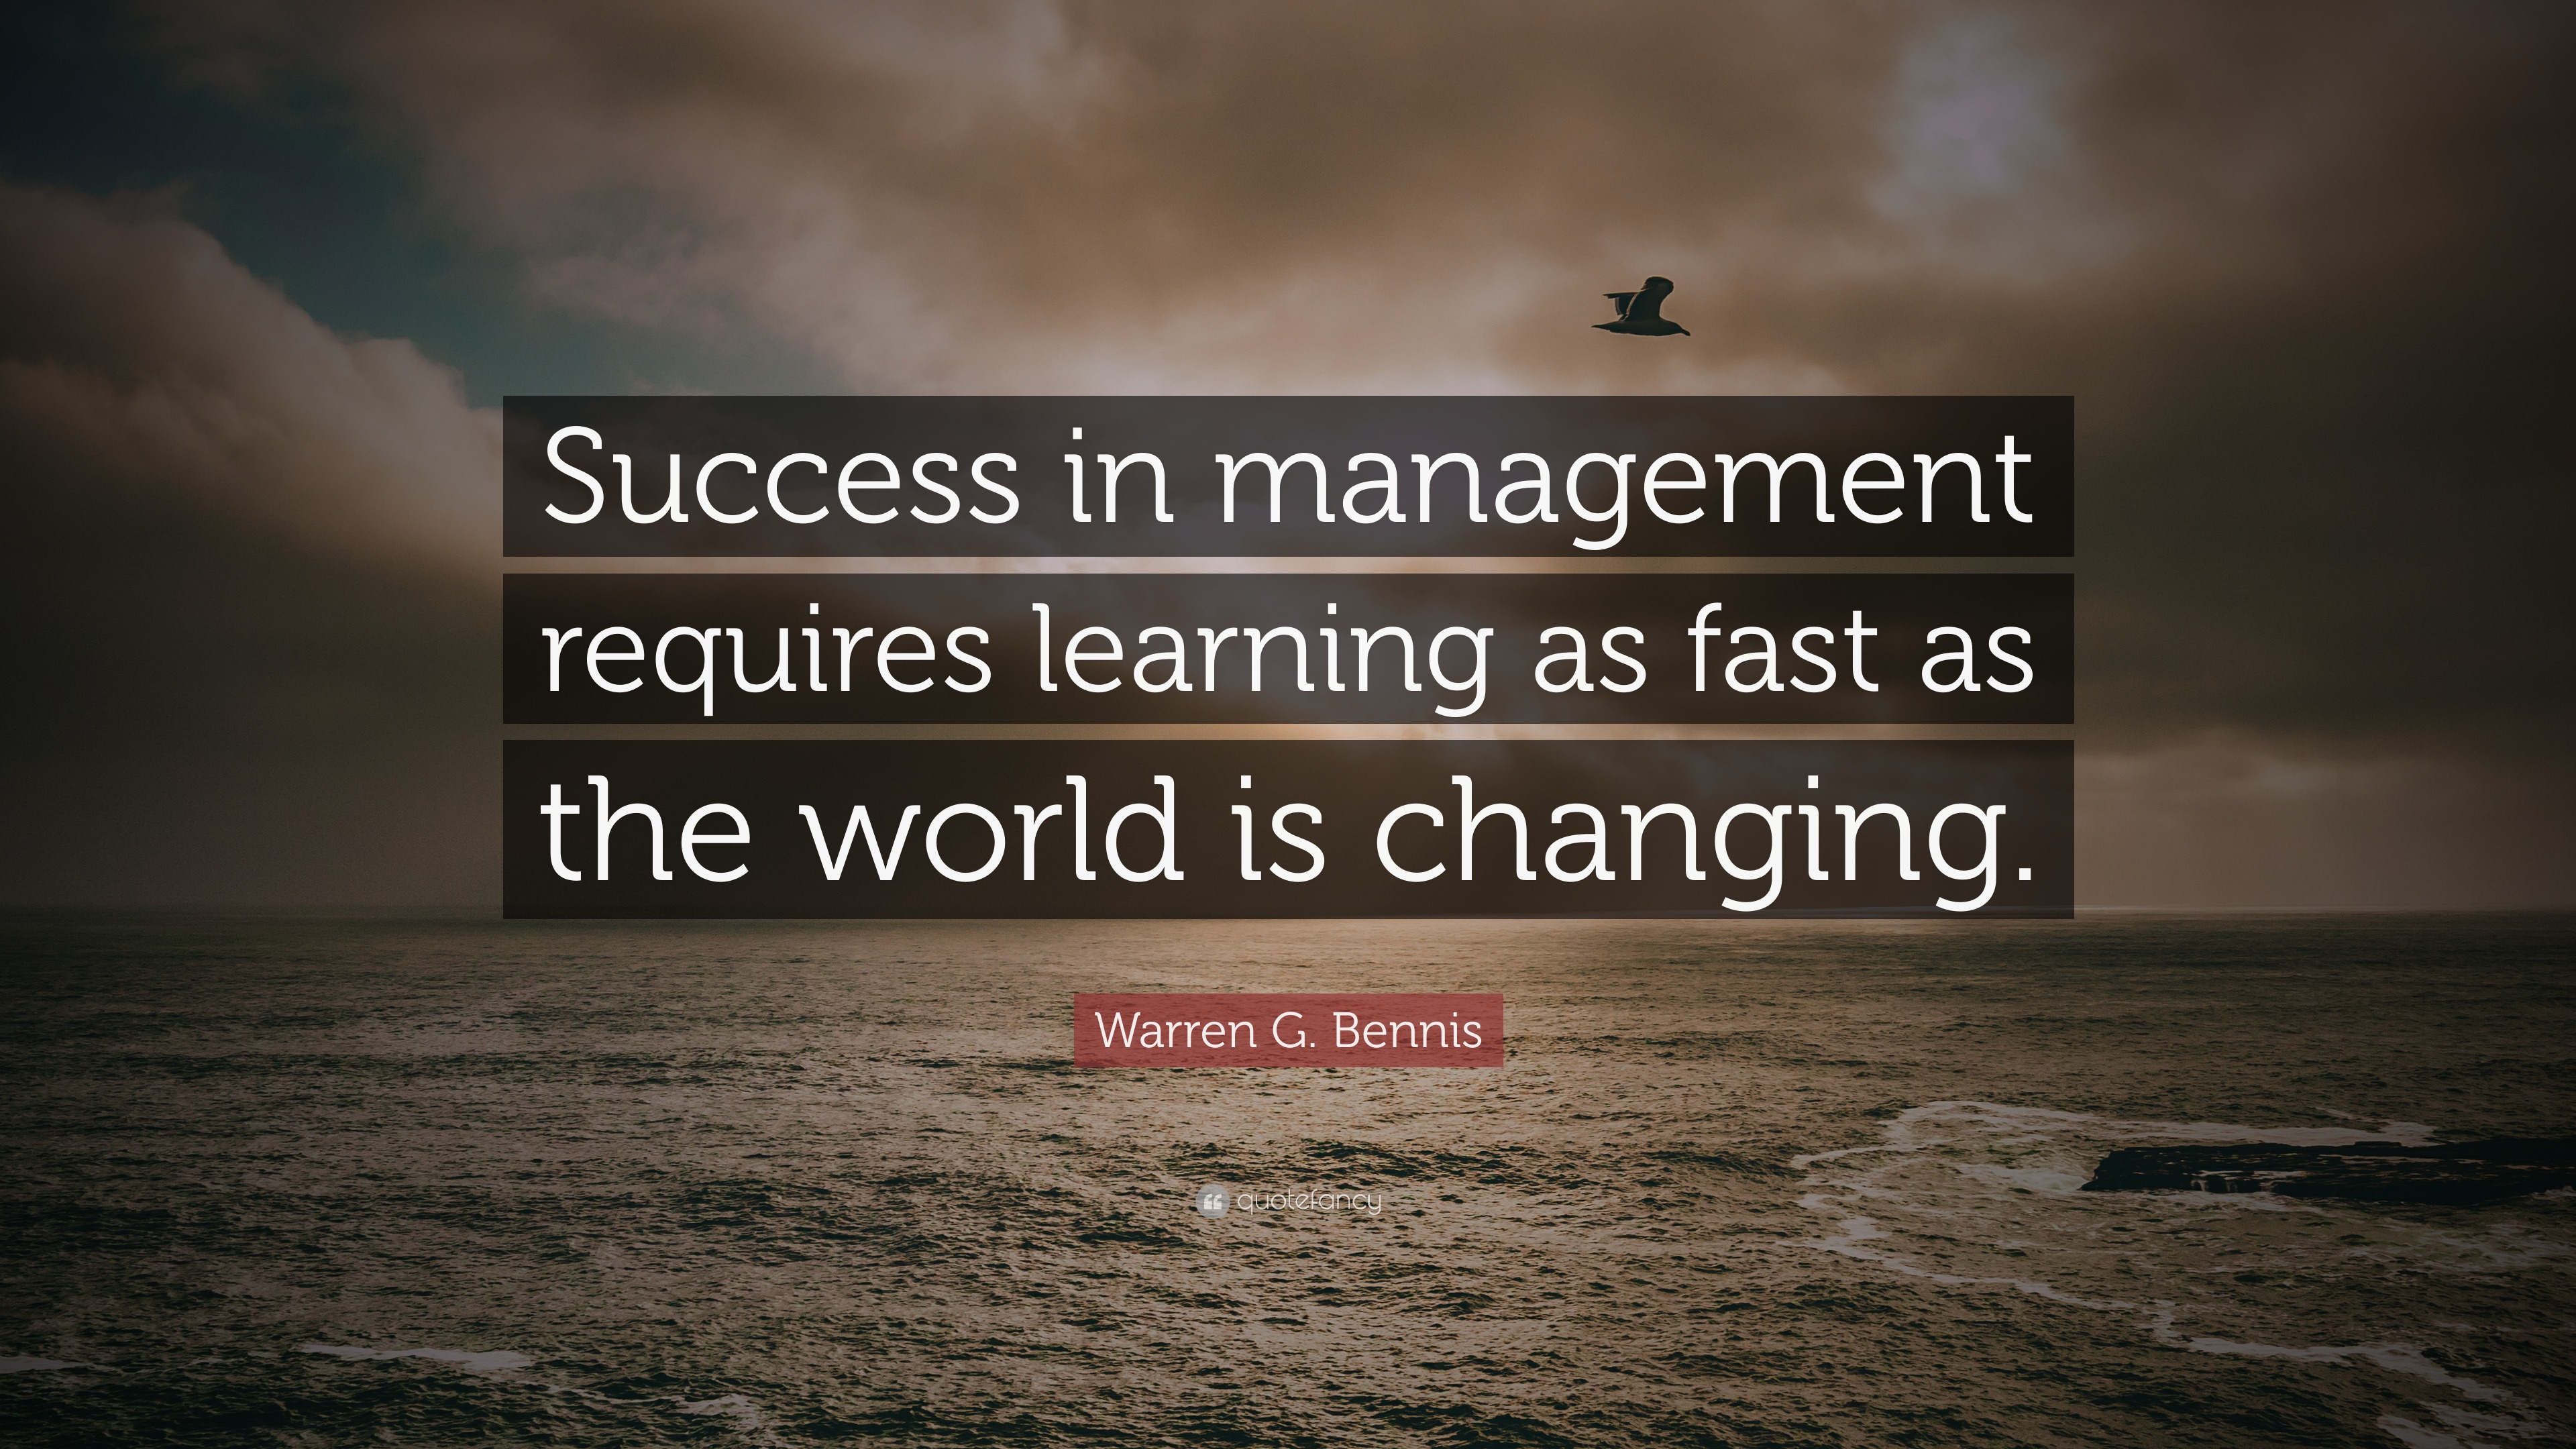 Warren G. Bennis Quote “Success in management requires